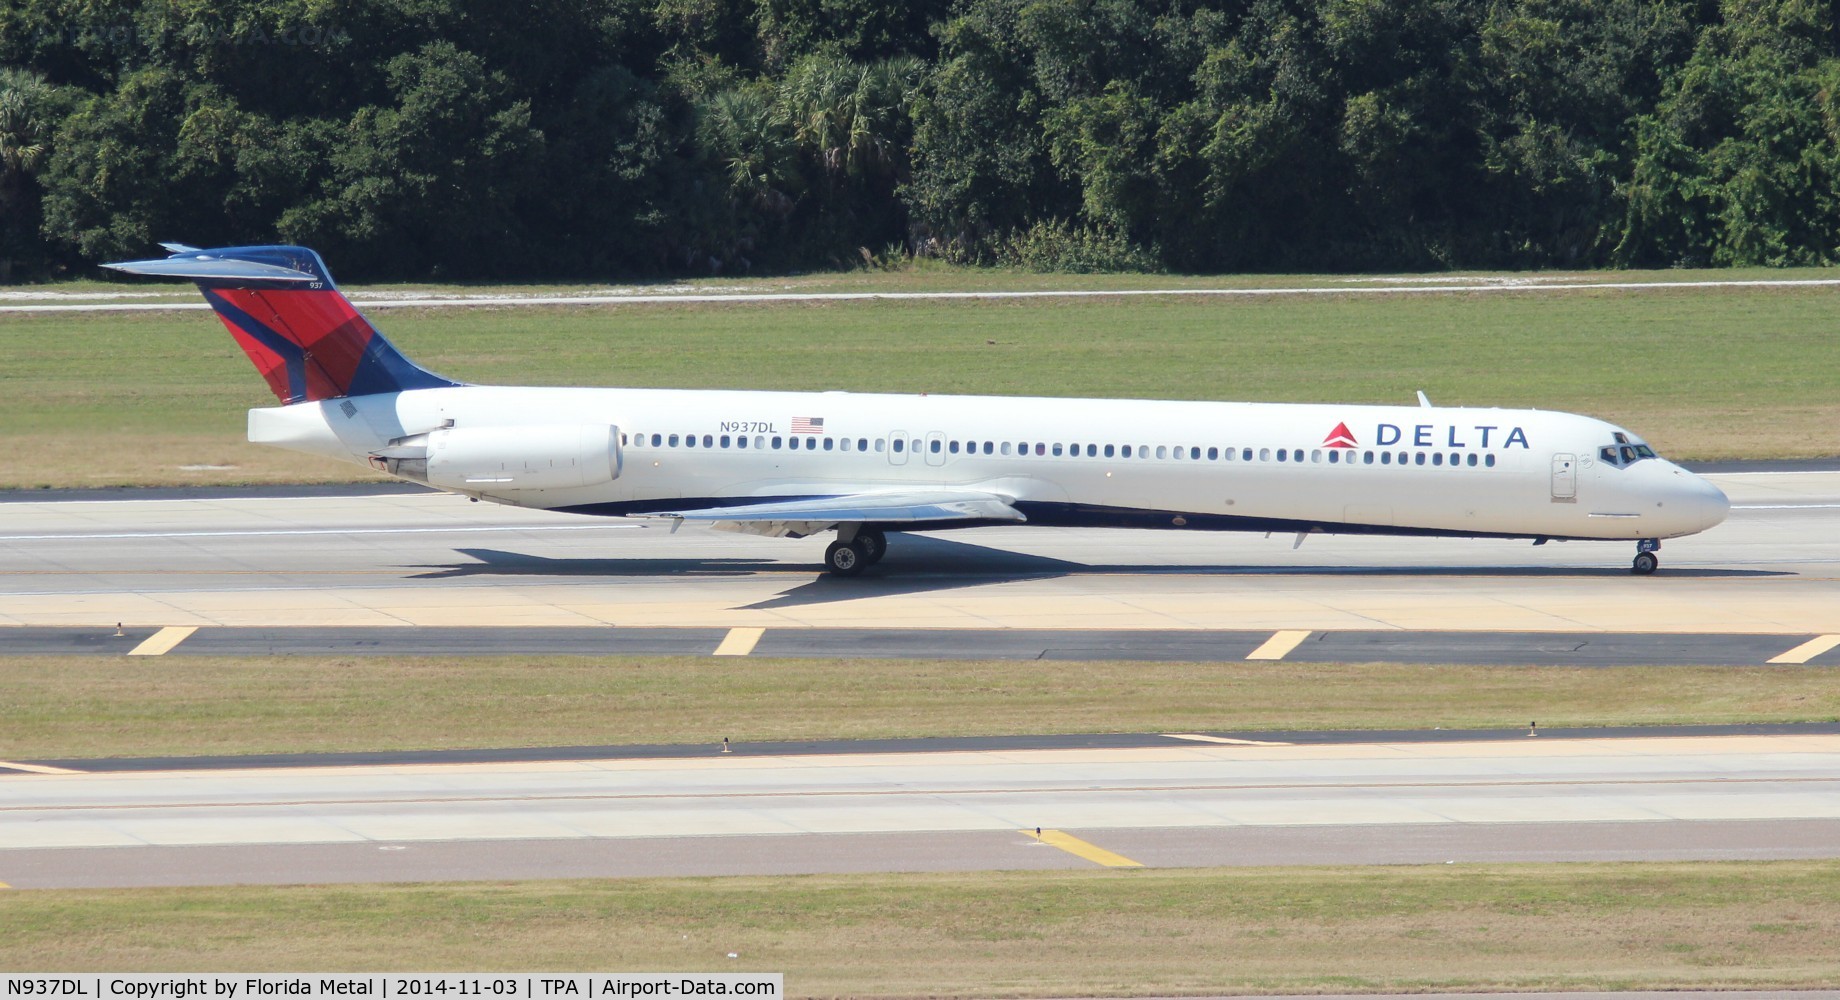 N937DL, 1989 McDonnell Douglas MD-88 C/N 49810, Delta MD-88